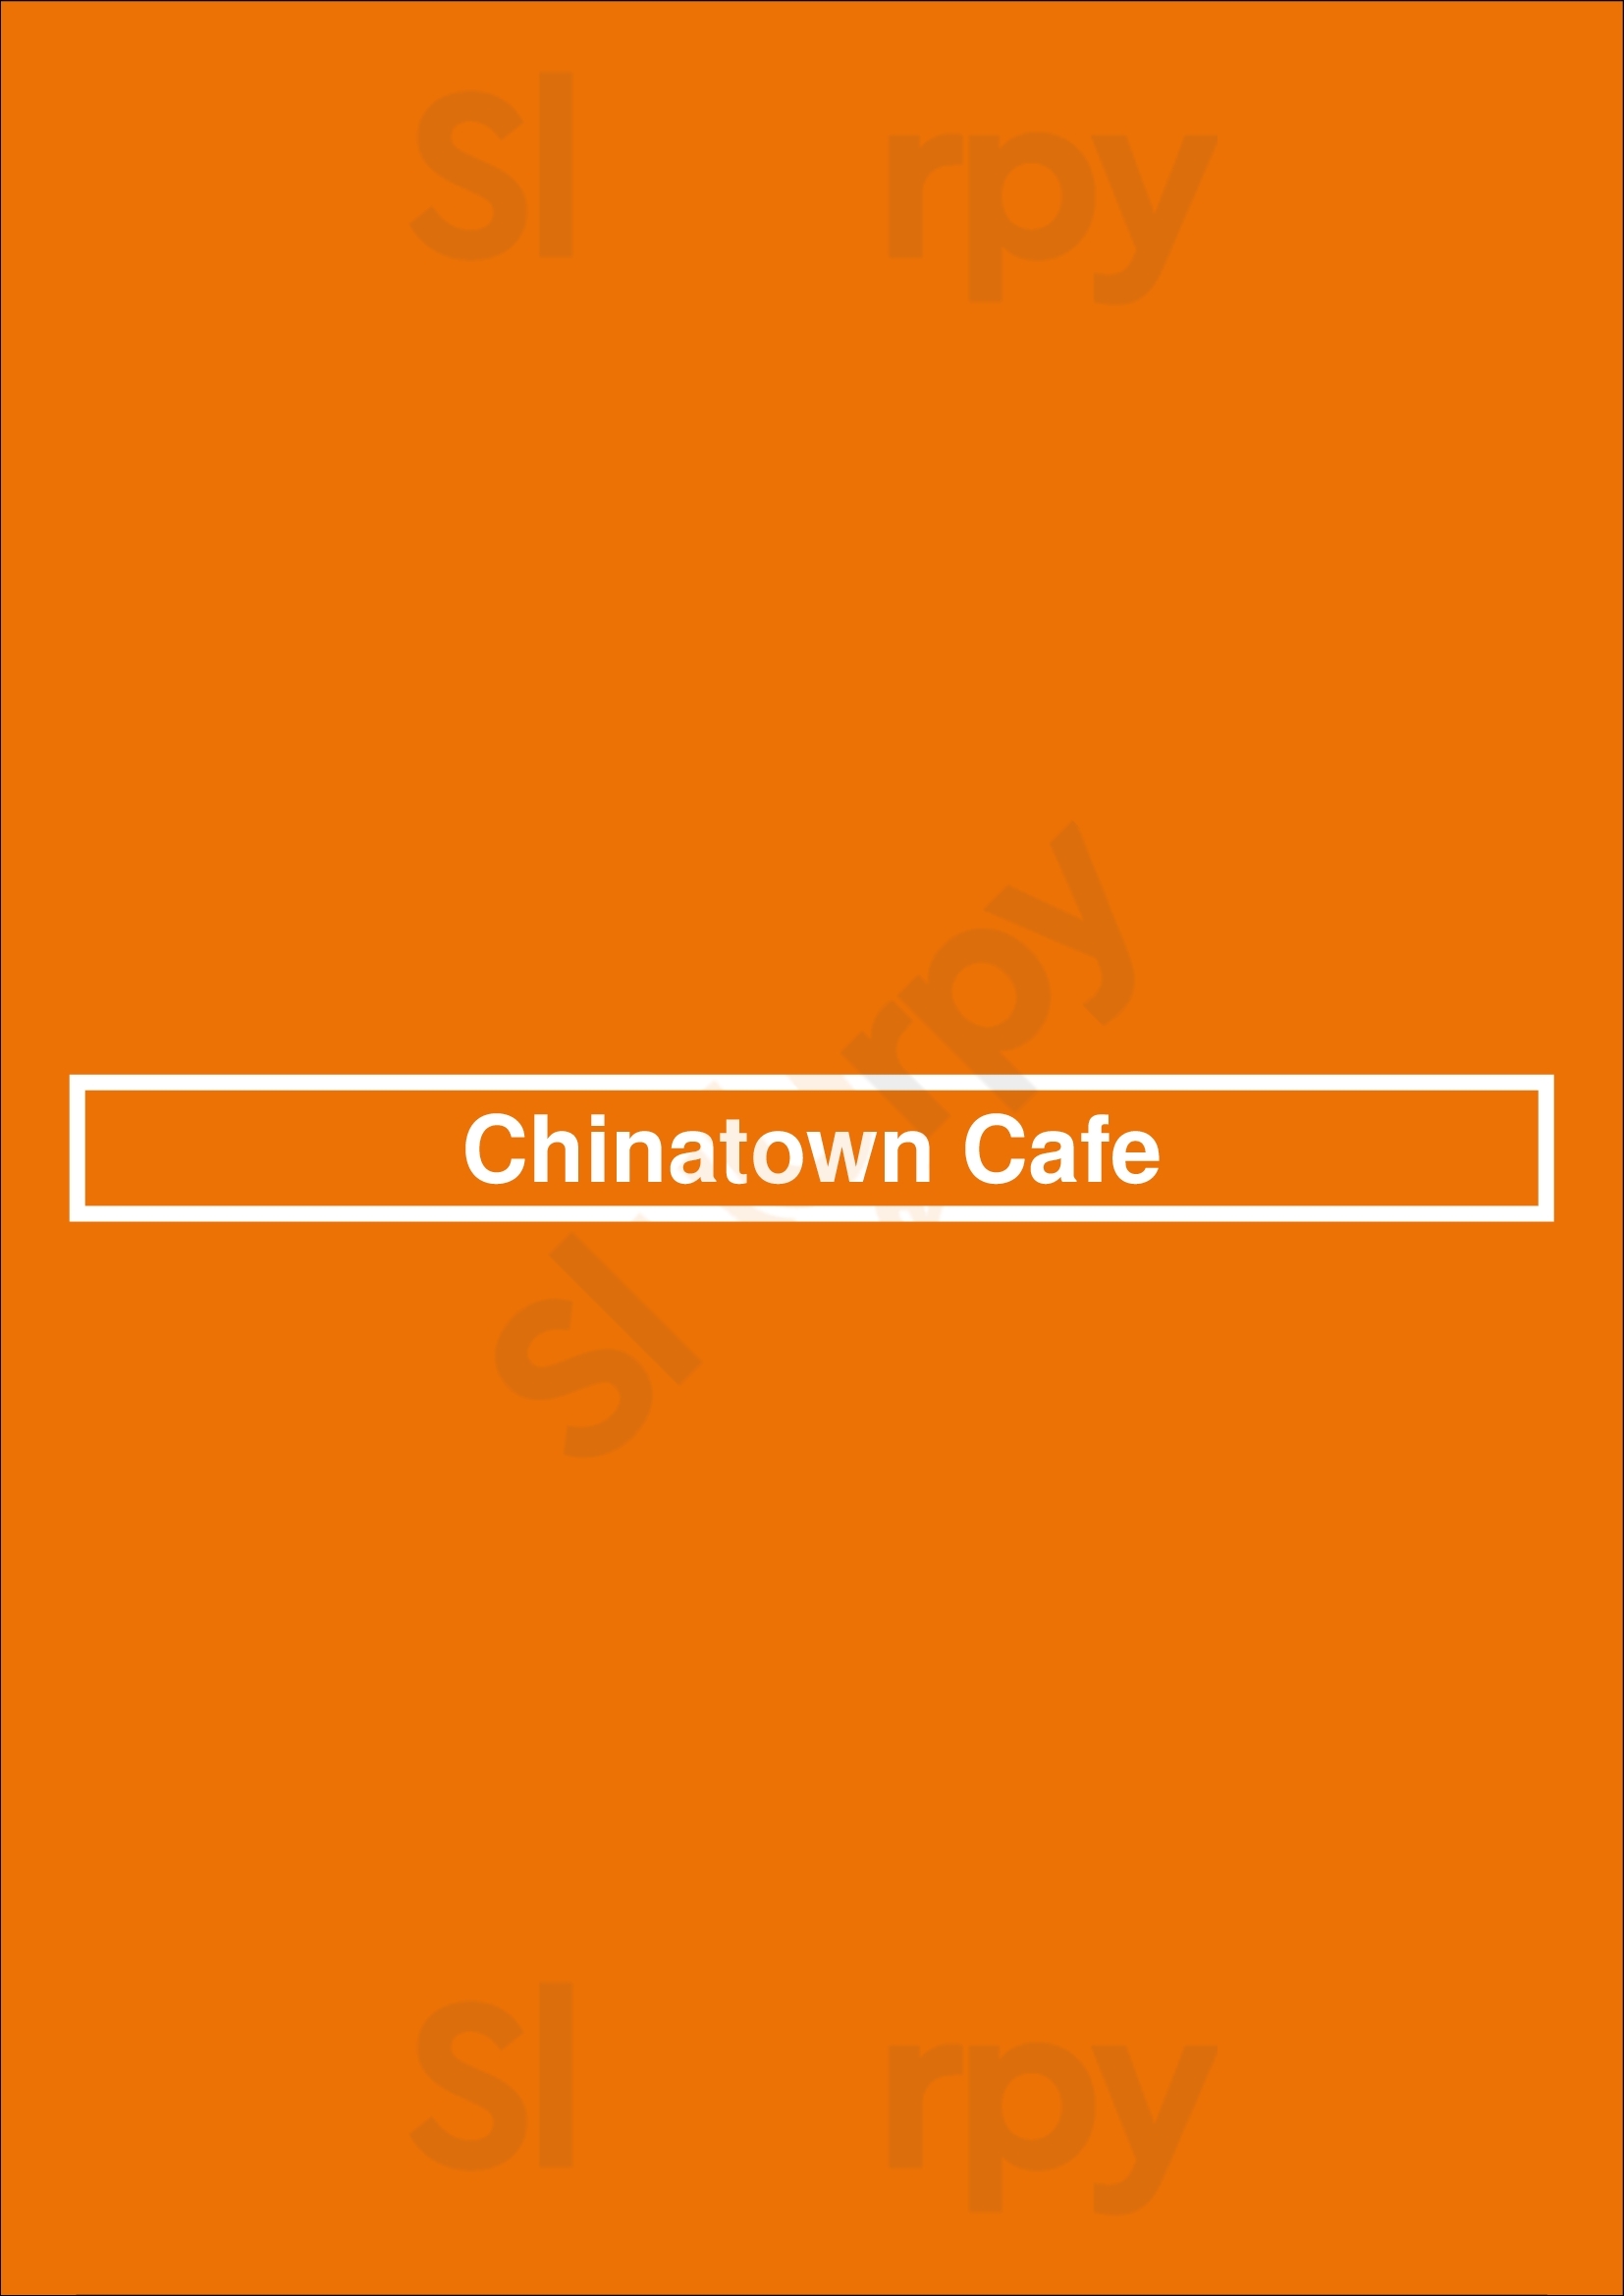 Chinatown Cafe Denton Menu - 1